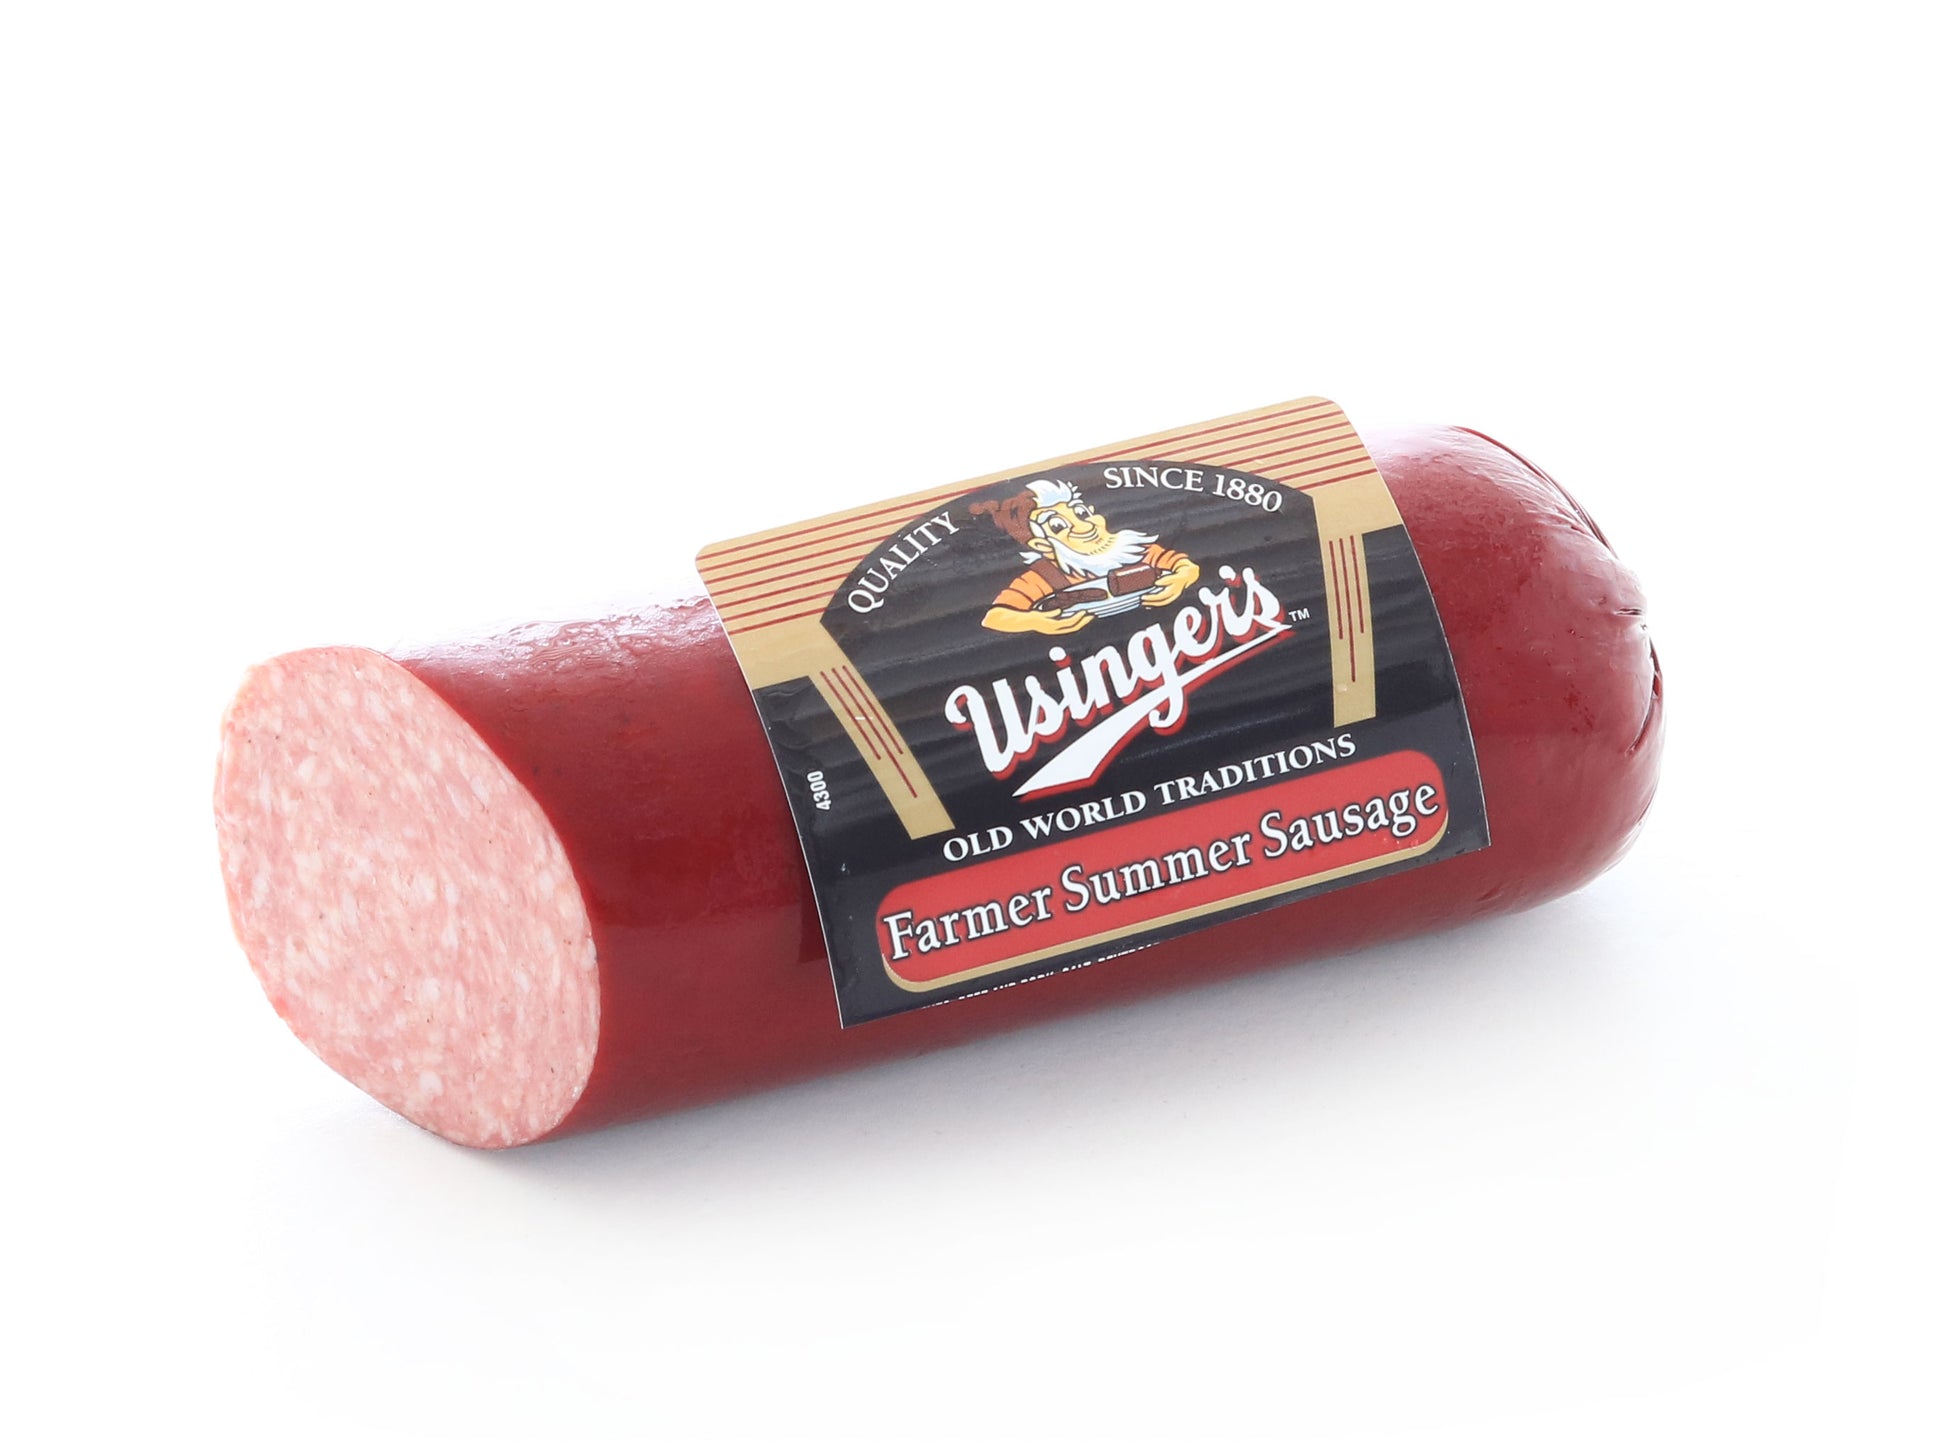 12 ounce piece of farmer summer sausage